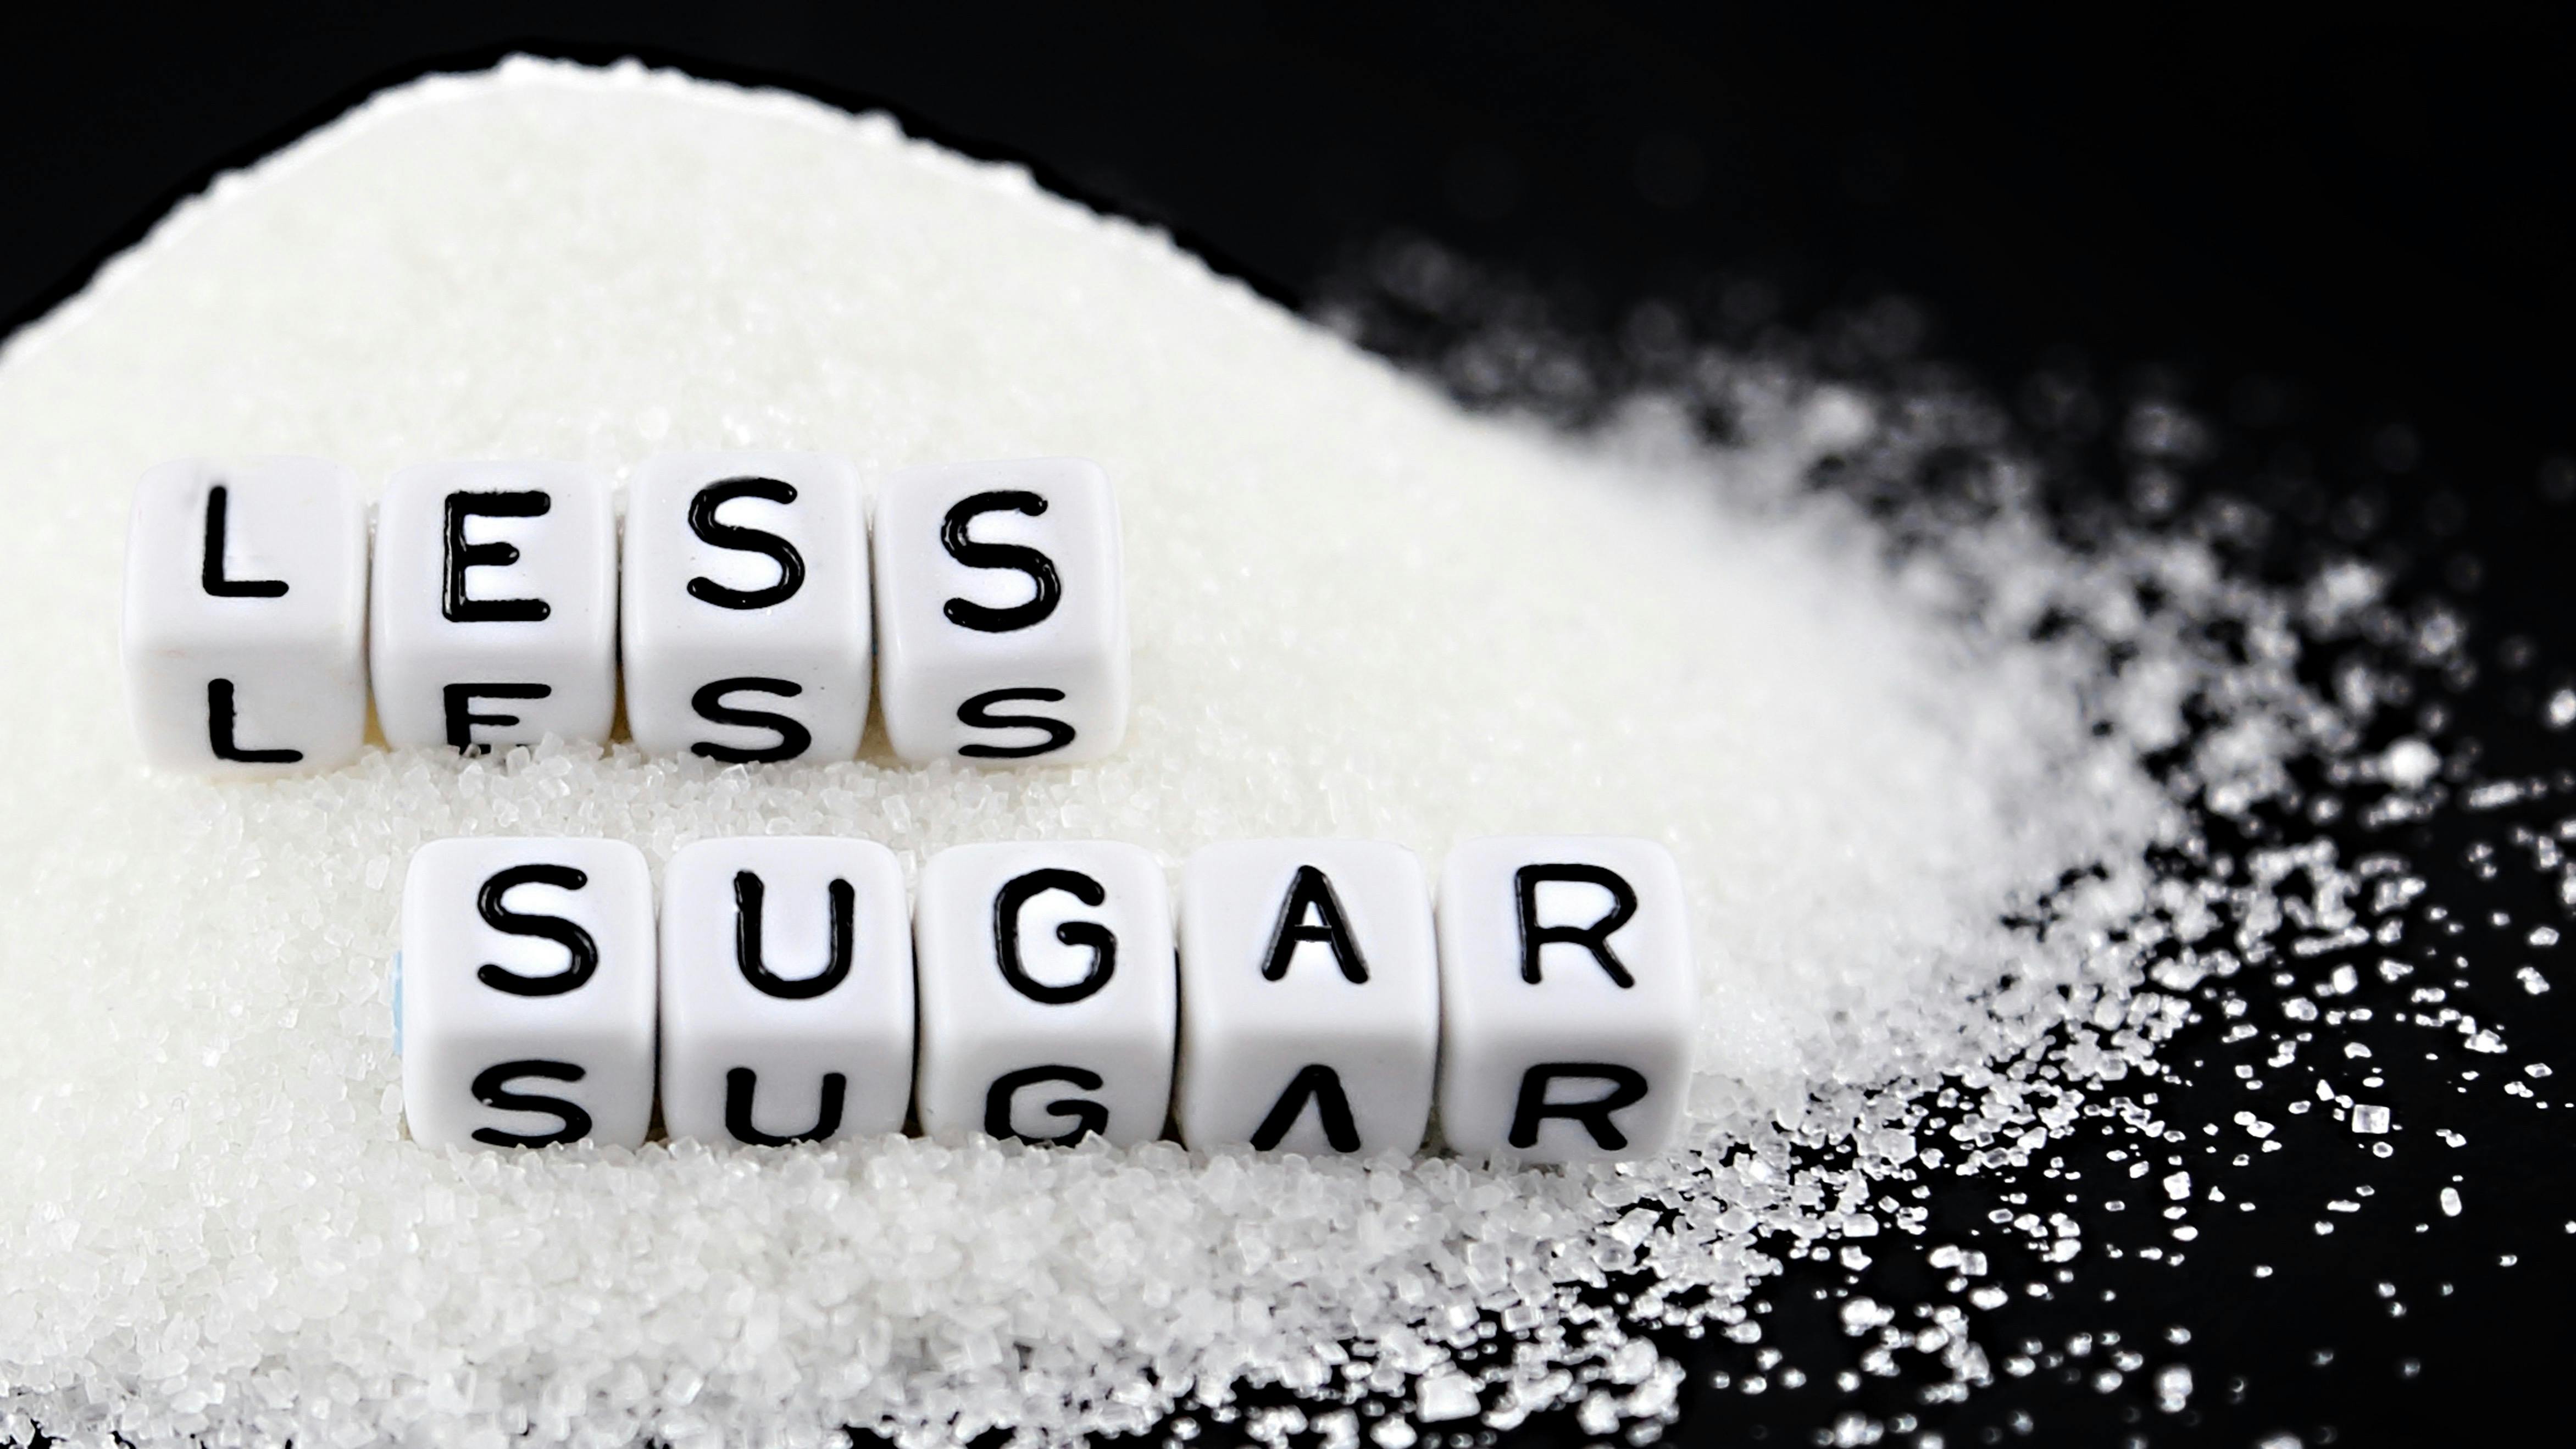 sugar consumption down in norway